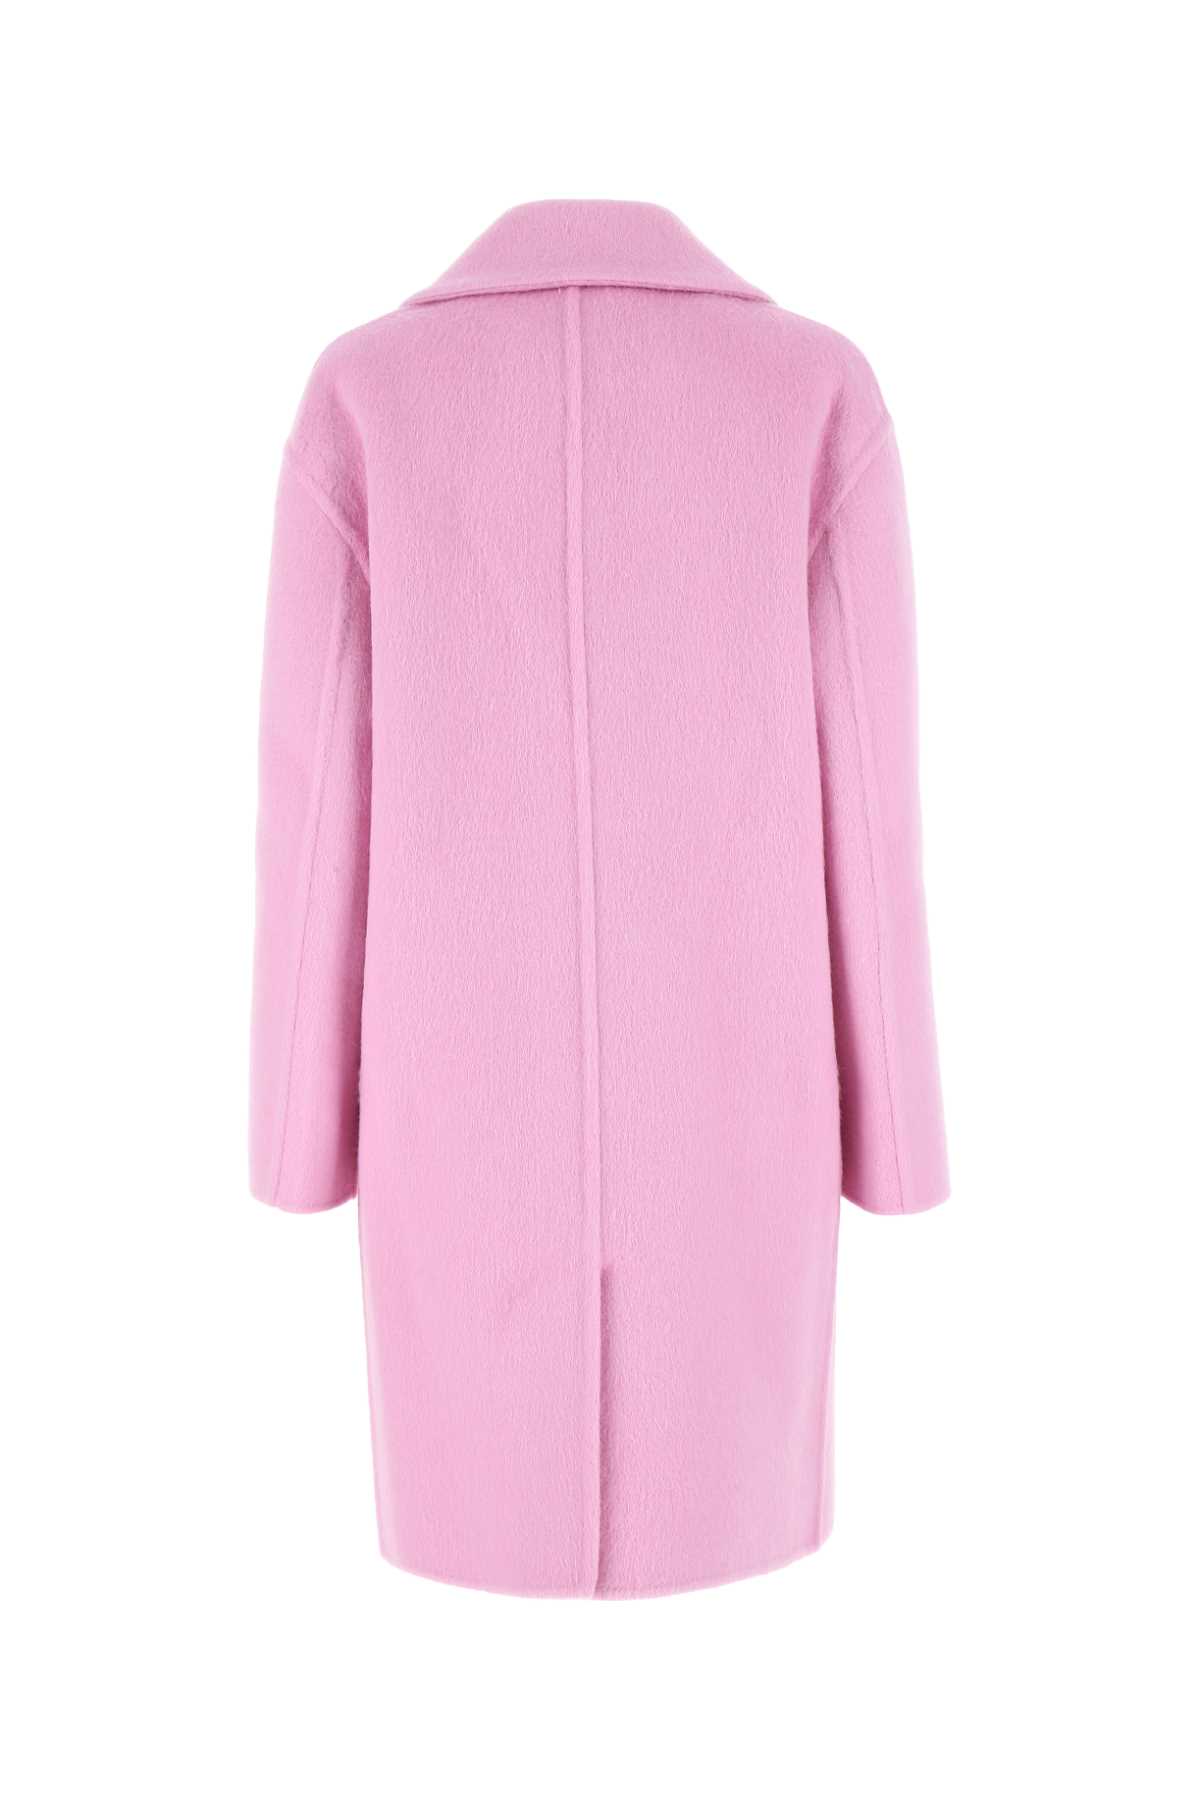 Bottega Veneta Pink Wool Blend Coat In 5600